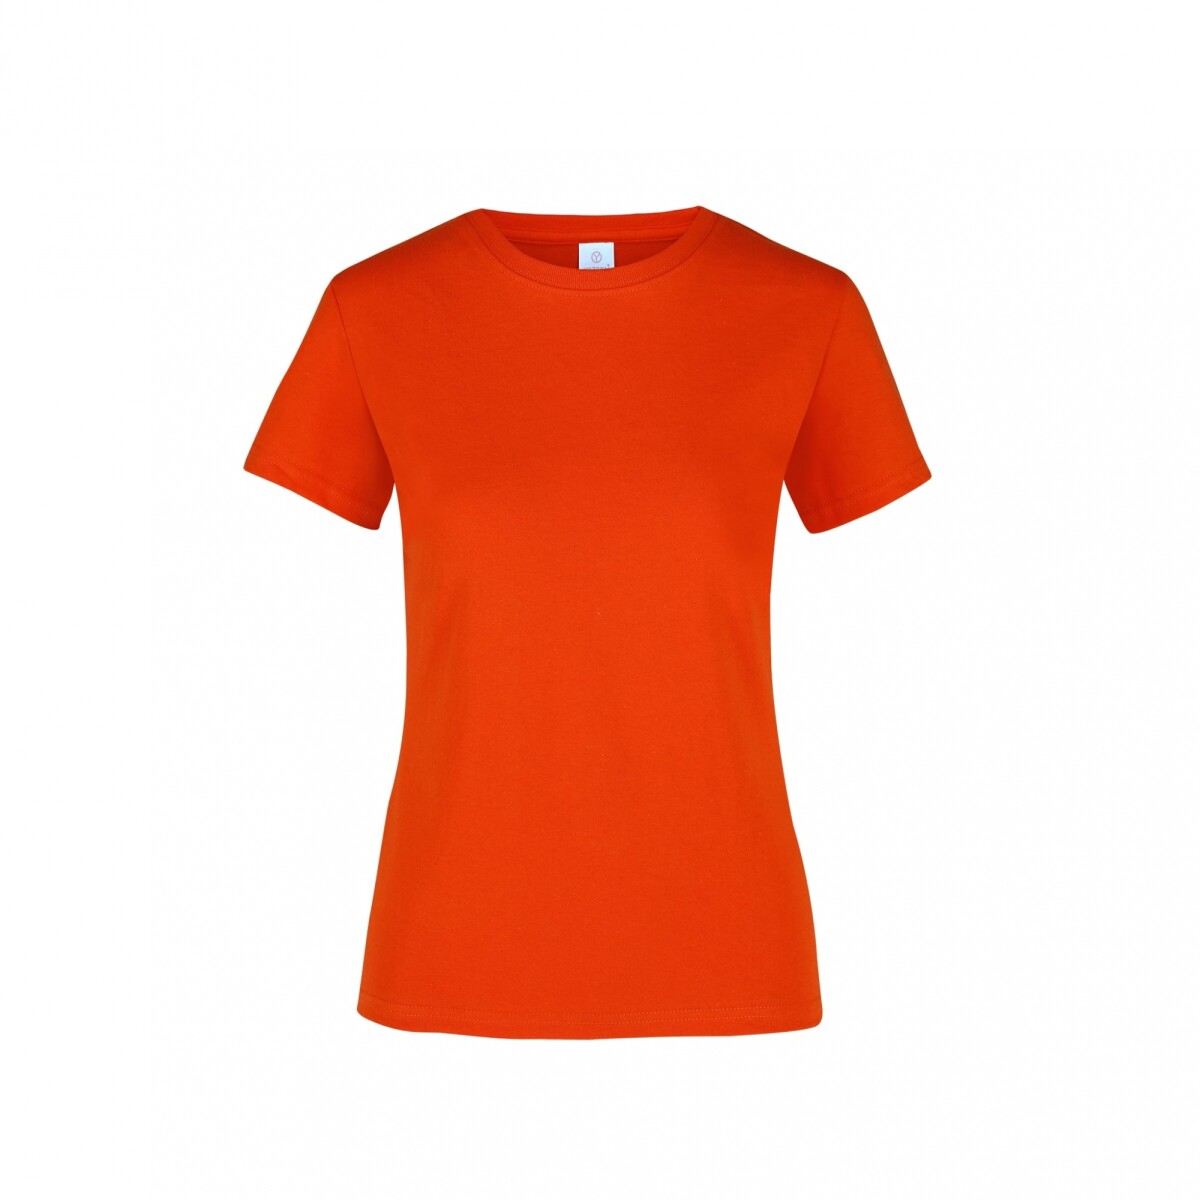 Camiseta a la base dama - Naranja 